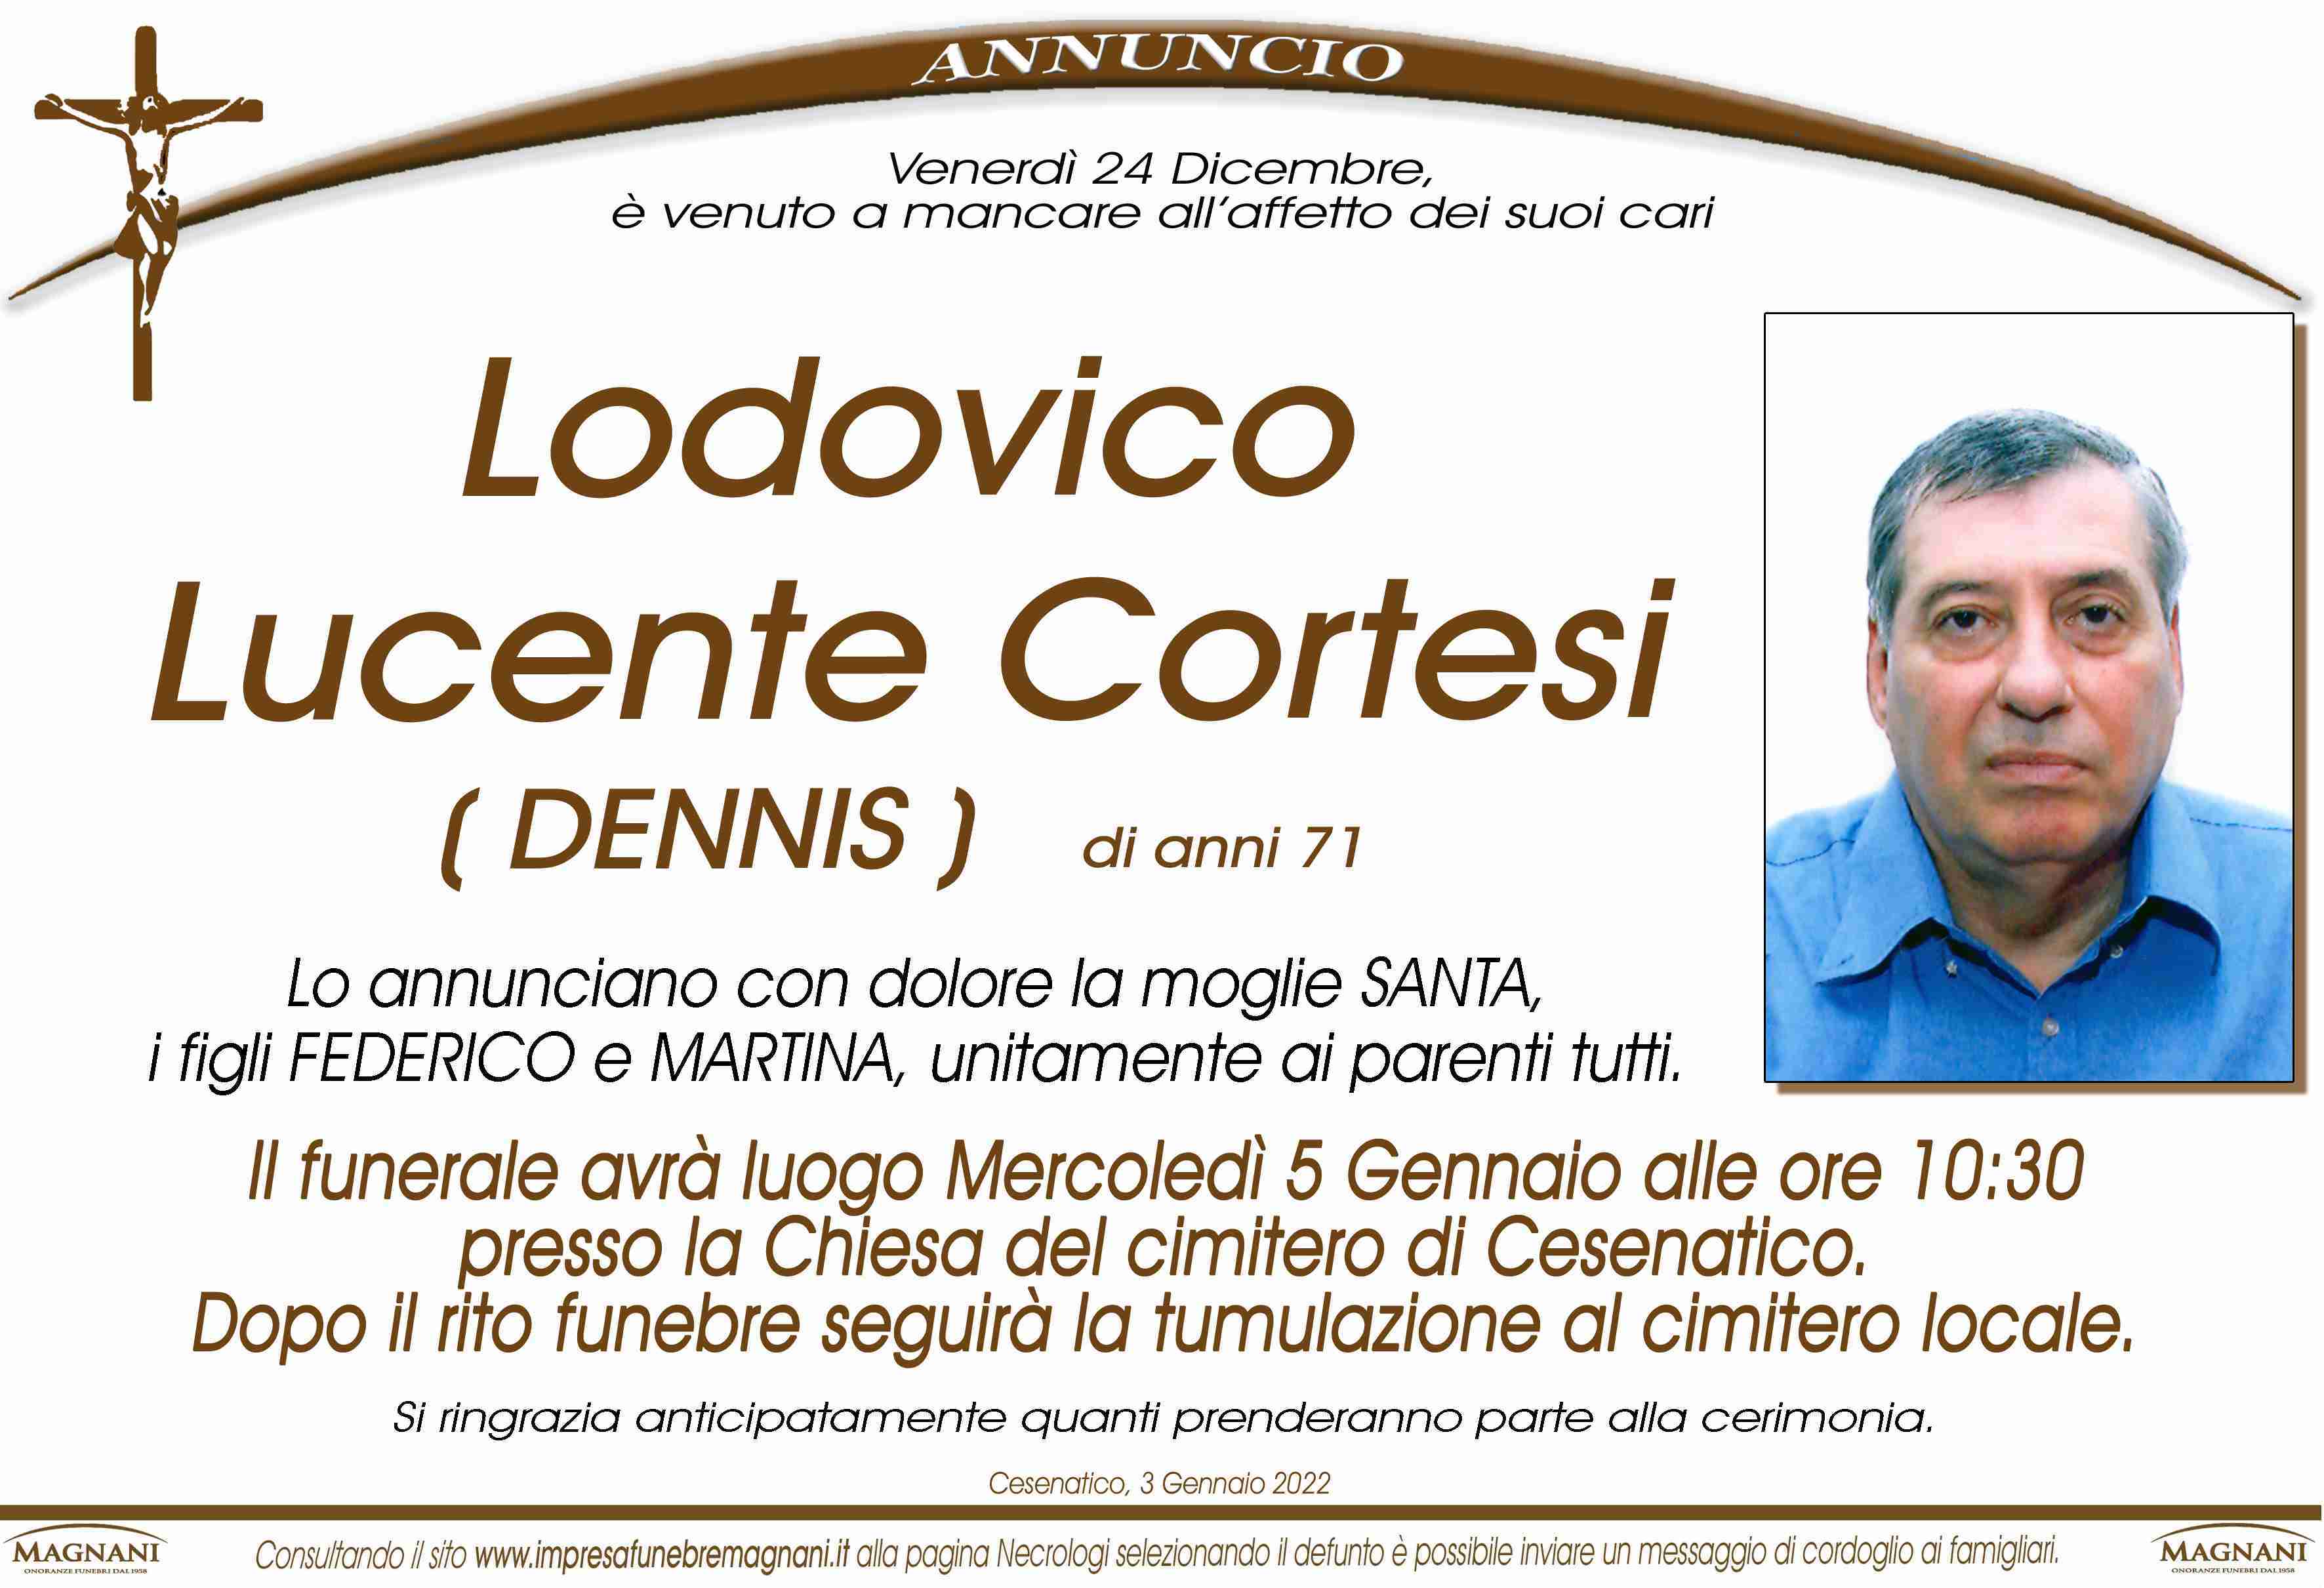 Lodovico Lucente Cortesi